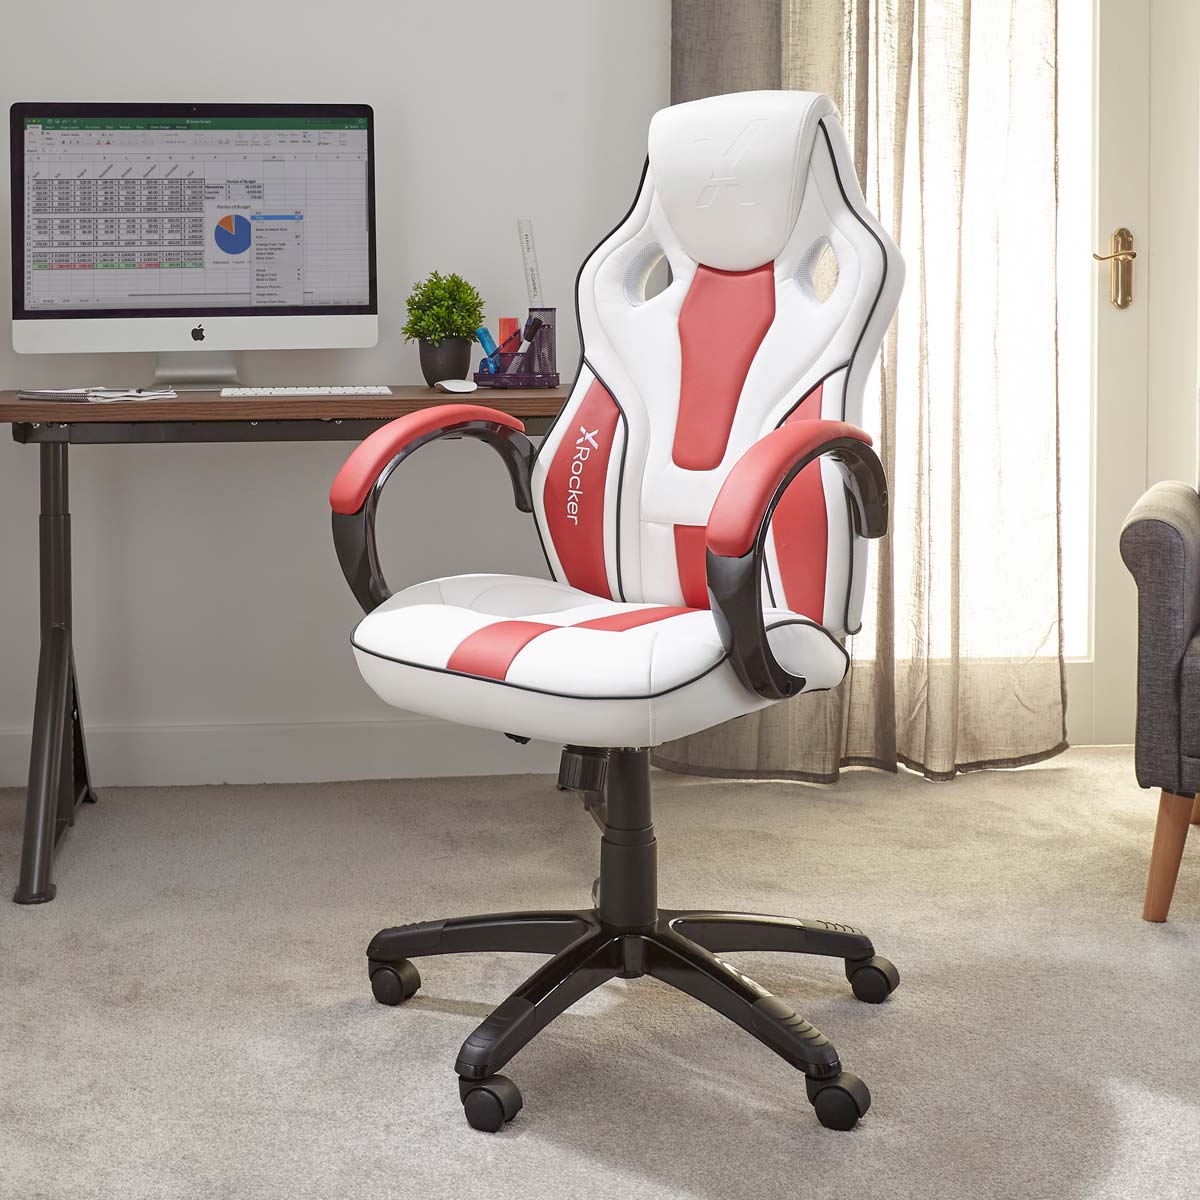 X Rocker Maverick Pc Office Gaming Chair - White & Red